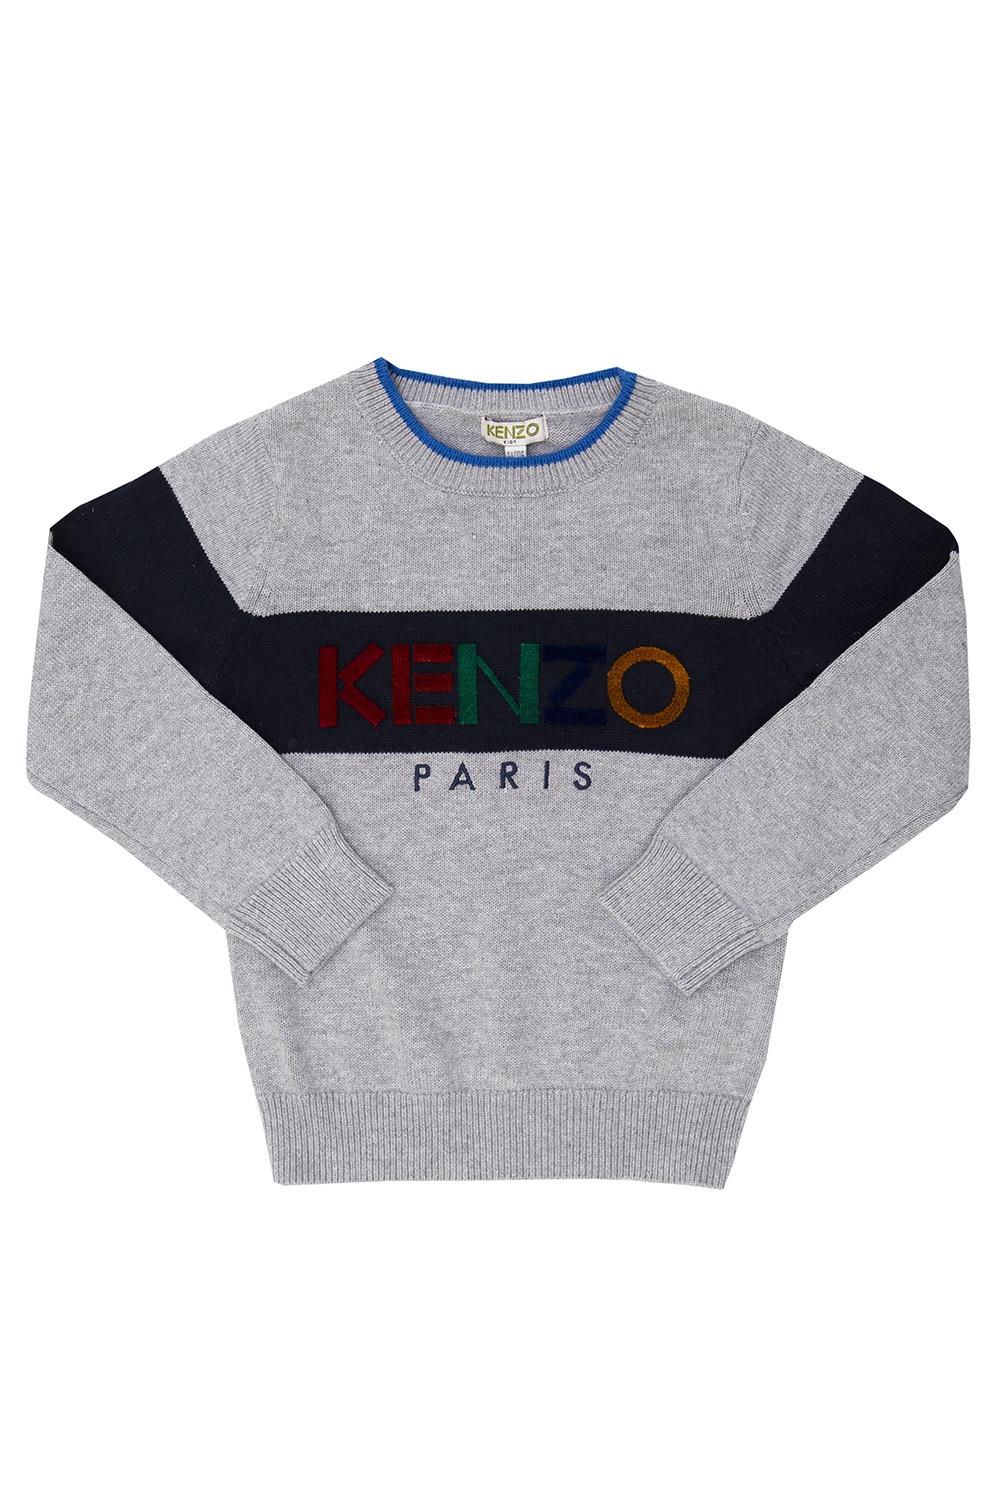 kenzo boys sweater